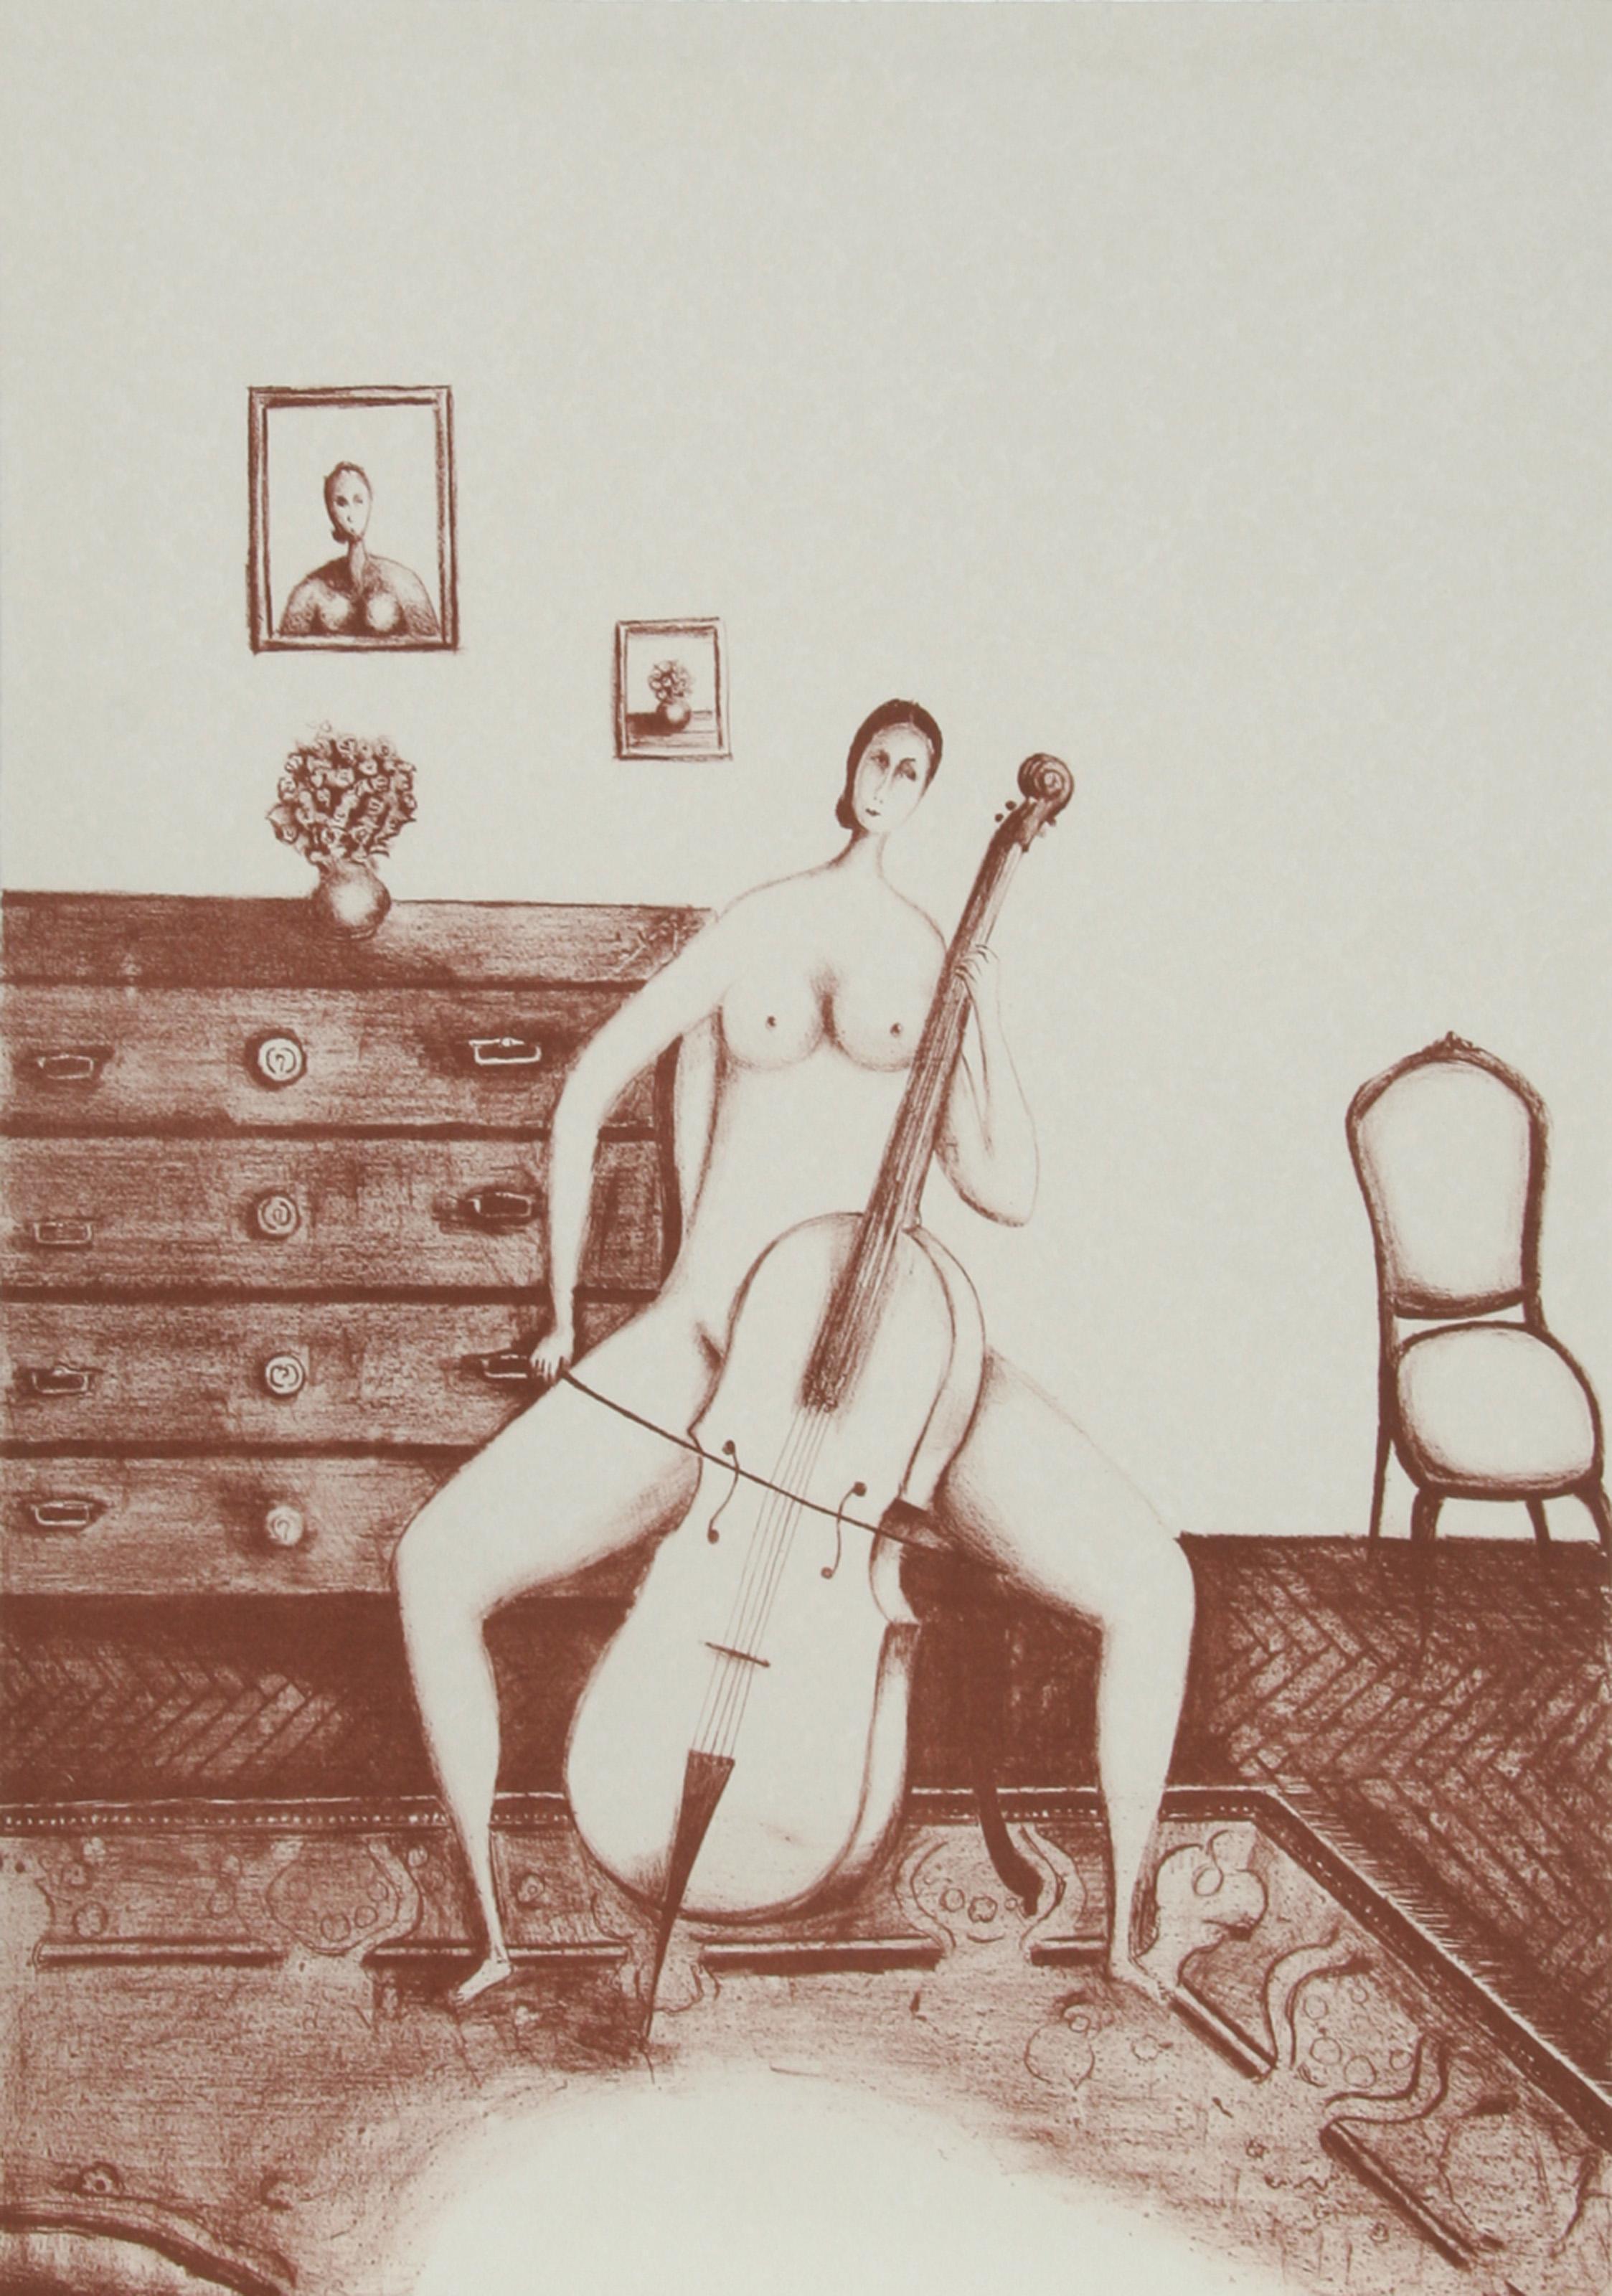 Branko Bahunek, Croatian (1935 - ) -  The Cellist (Sepia). Medium: Lithograph, Size: 29 in. x 20.5 in. (73.66 cm x 52.07 cm) 